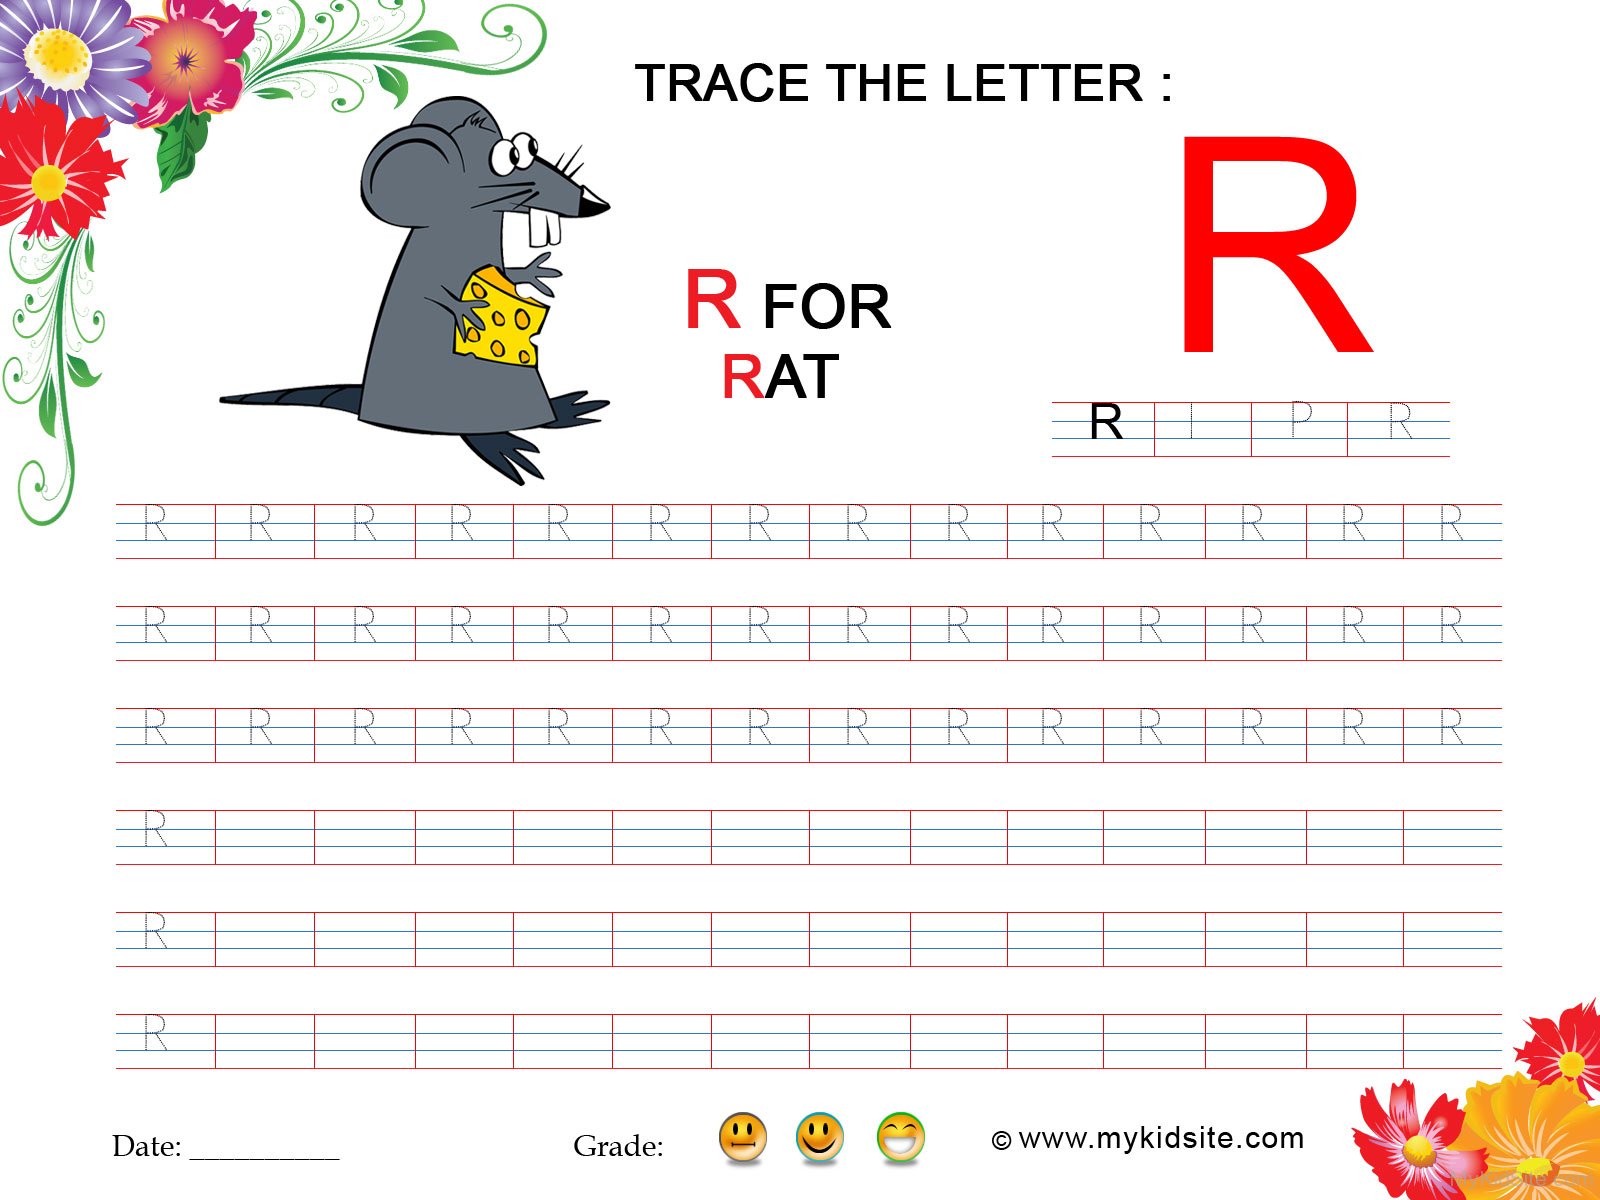 tracing-worksheet-for-letter-r